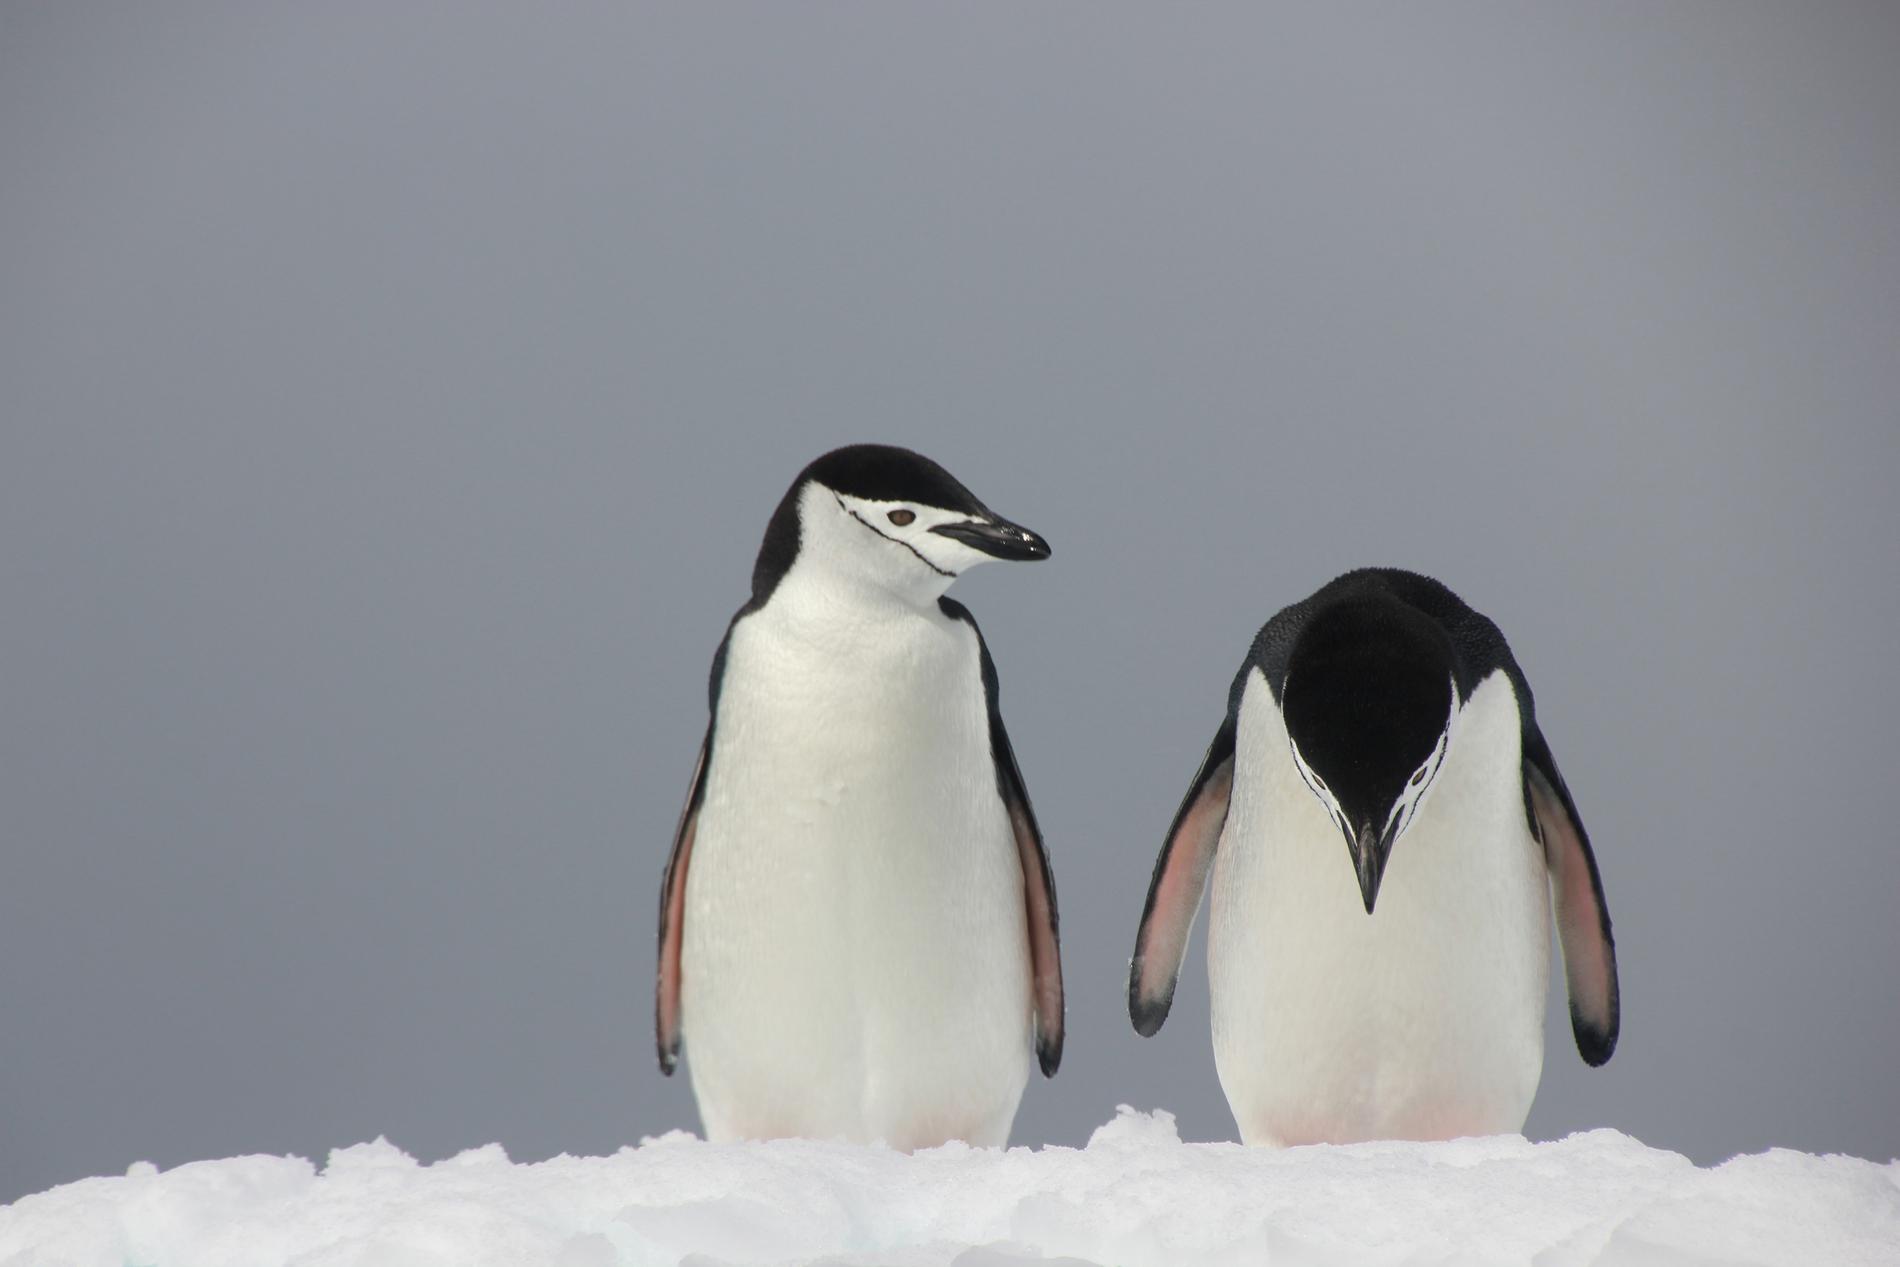 INGEN PINGVINST I DAG HELLER? Besvikelsen var stor på Antarktis när Peter Odeh var framme med kameran. Bildtiteln ”Trubbel i paradiset” säger det mesta.